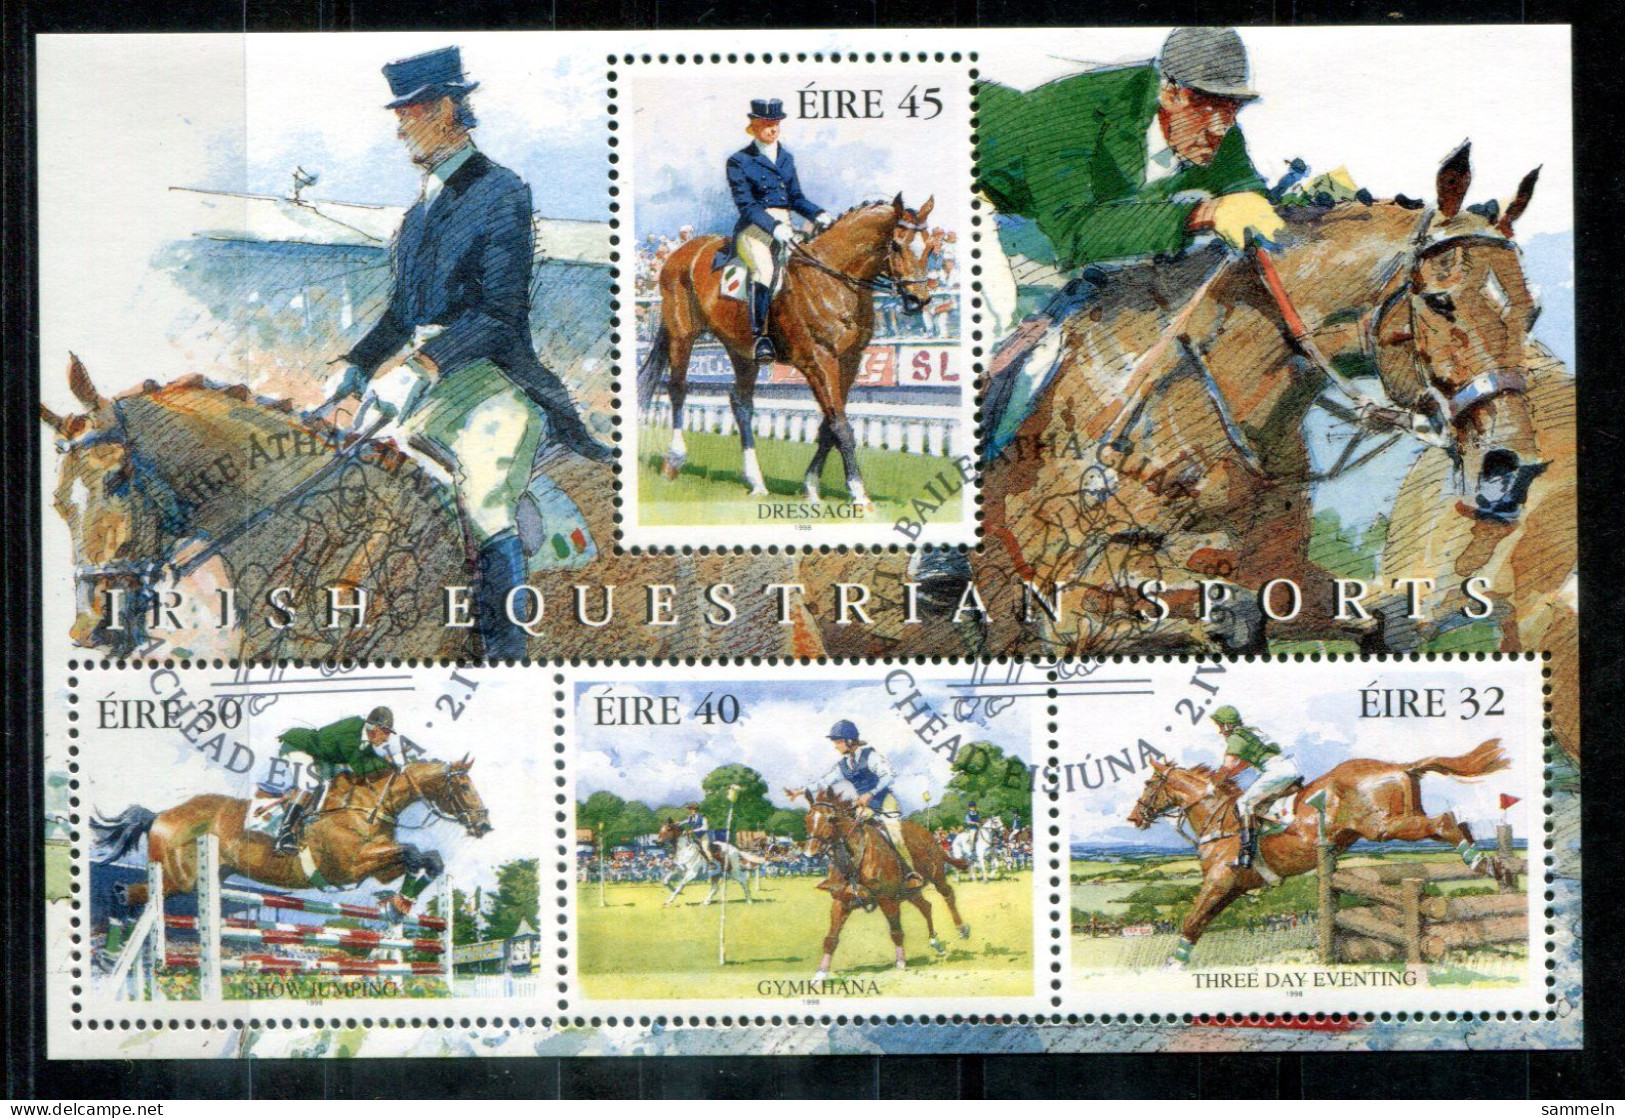 IRLAND Block 27, Bl.27 Canc. - Reitsport, Equestrian, Sport équestre, Pferd, Horse, Cheval   - IRELAND / IRLANDE - Blocs-feuillets